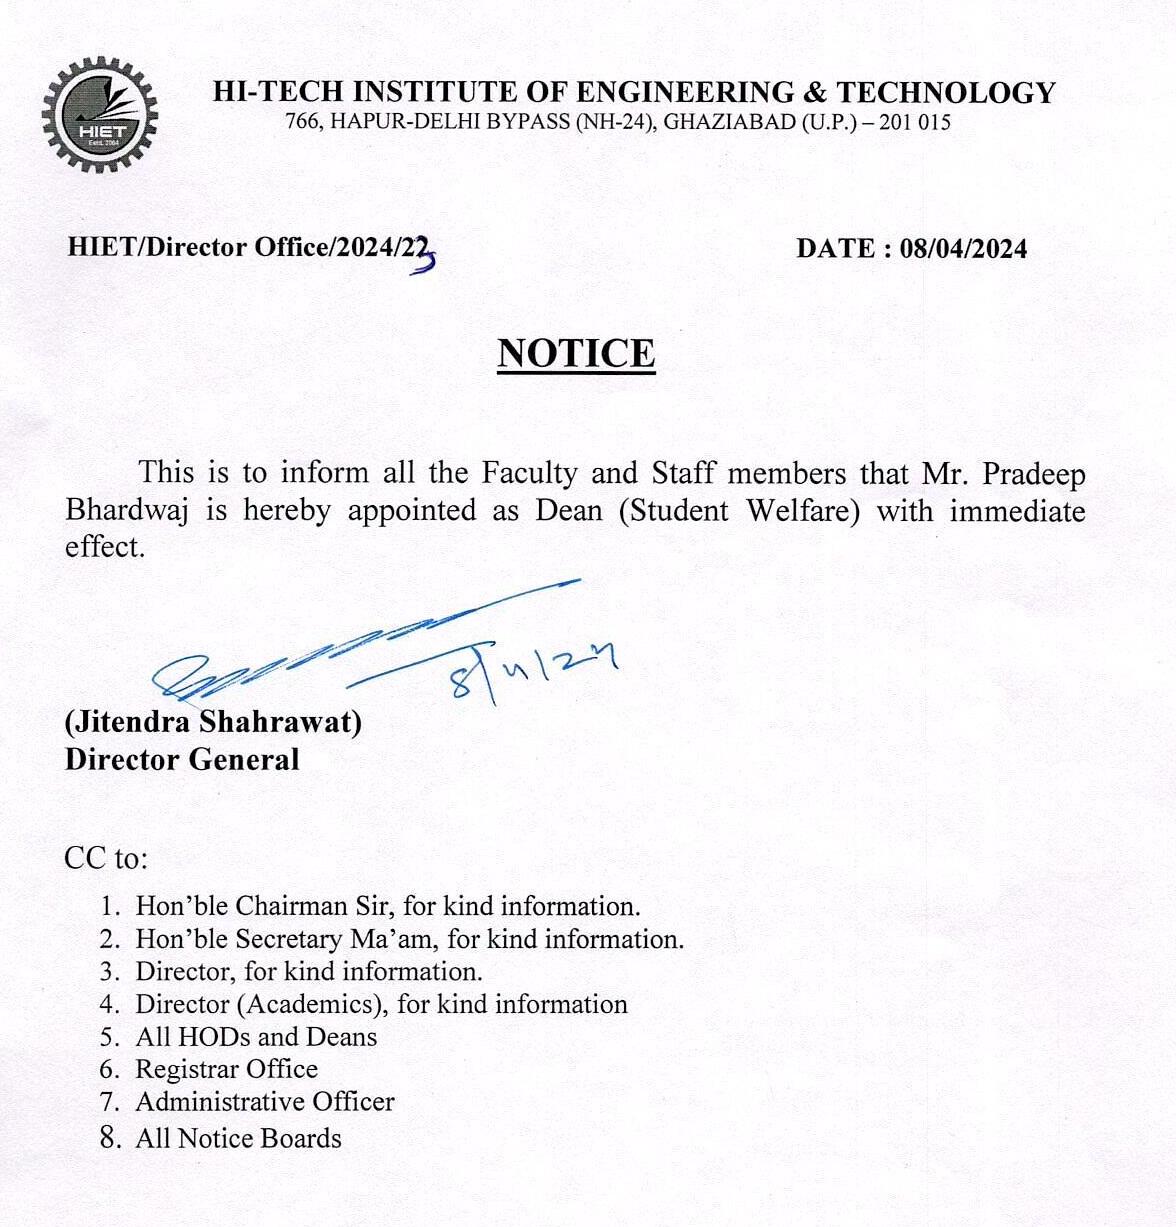 Mr. Pradeep Bhardwaj appointed Dean (Student Welfare)